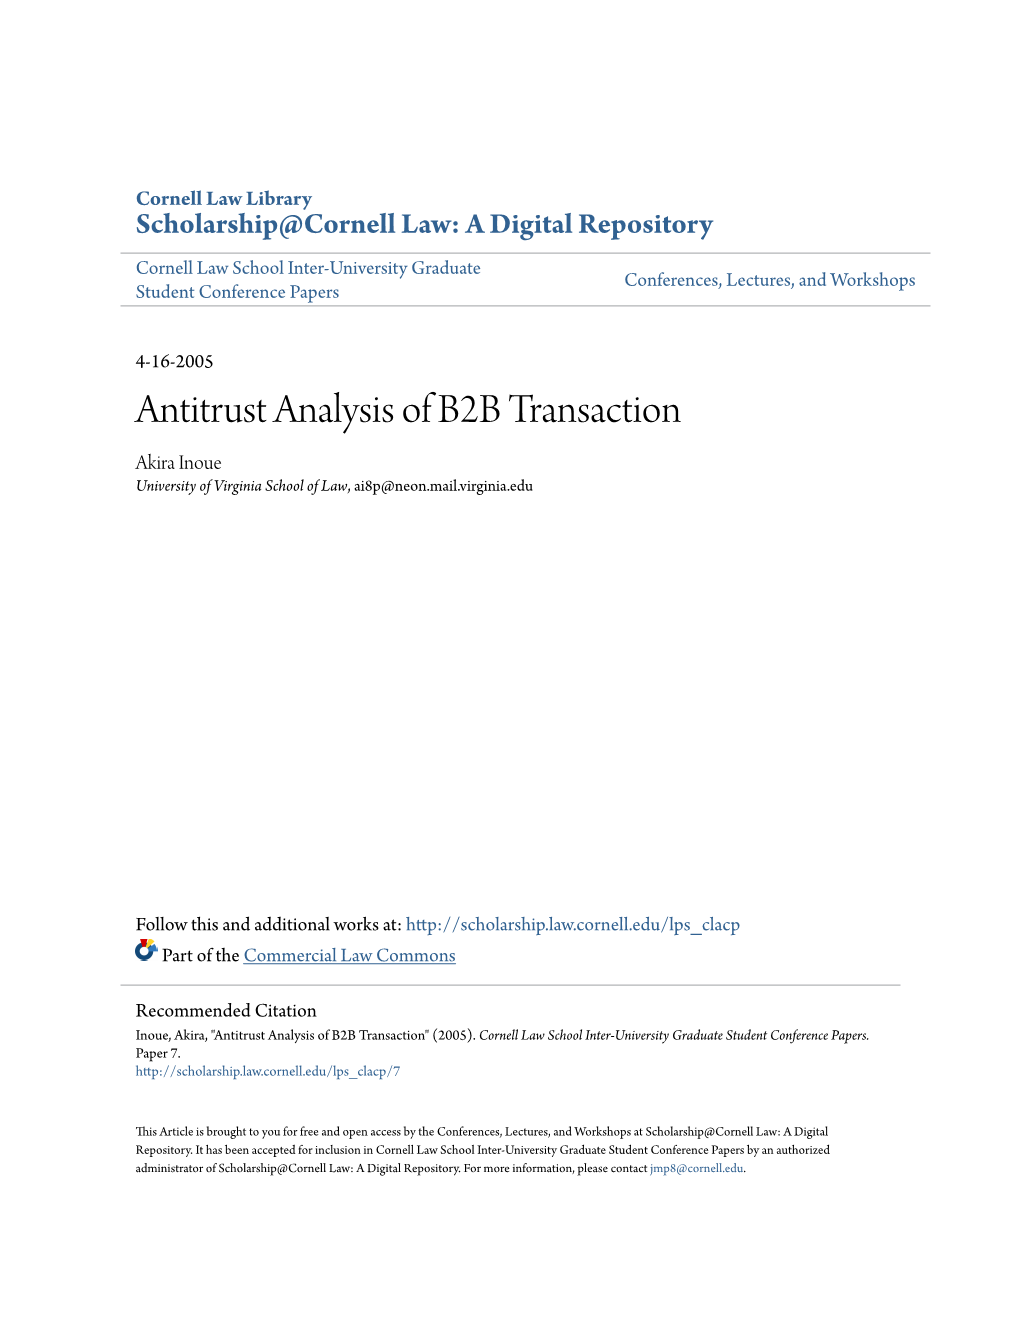 Antitrust Analysis of B2B Transaction Akira Inoue University of Virginia School of Law, Ai8p@Neon.Mail.Virginia.Edu